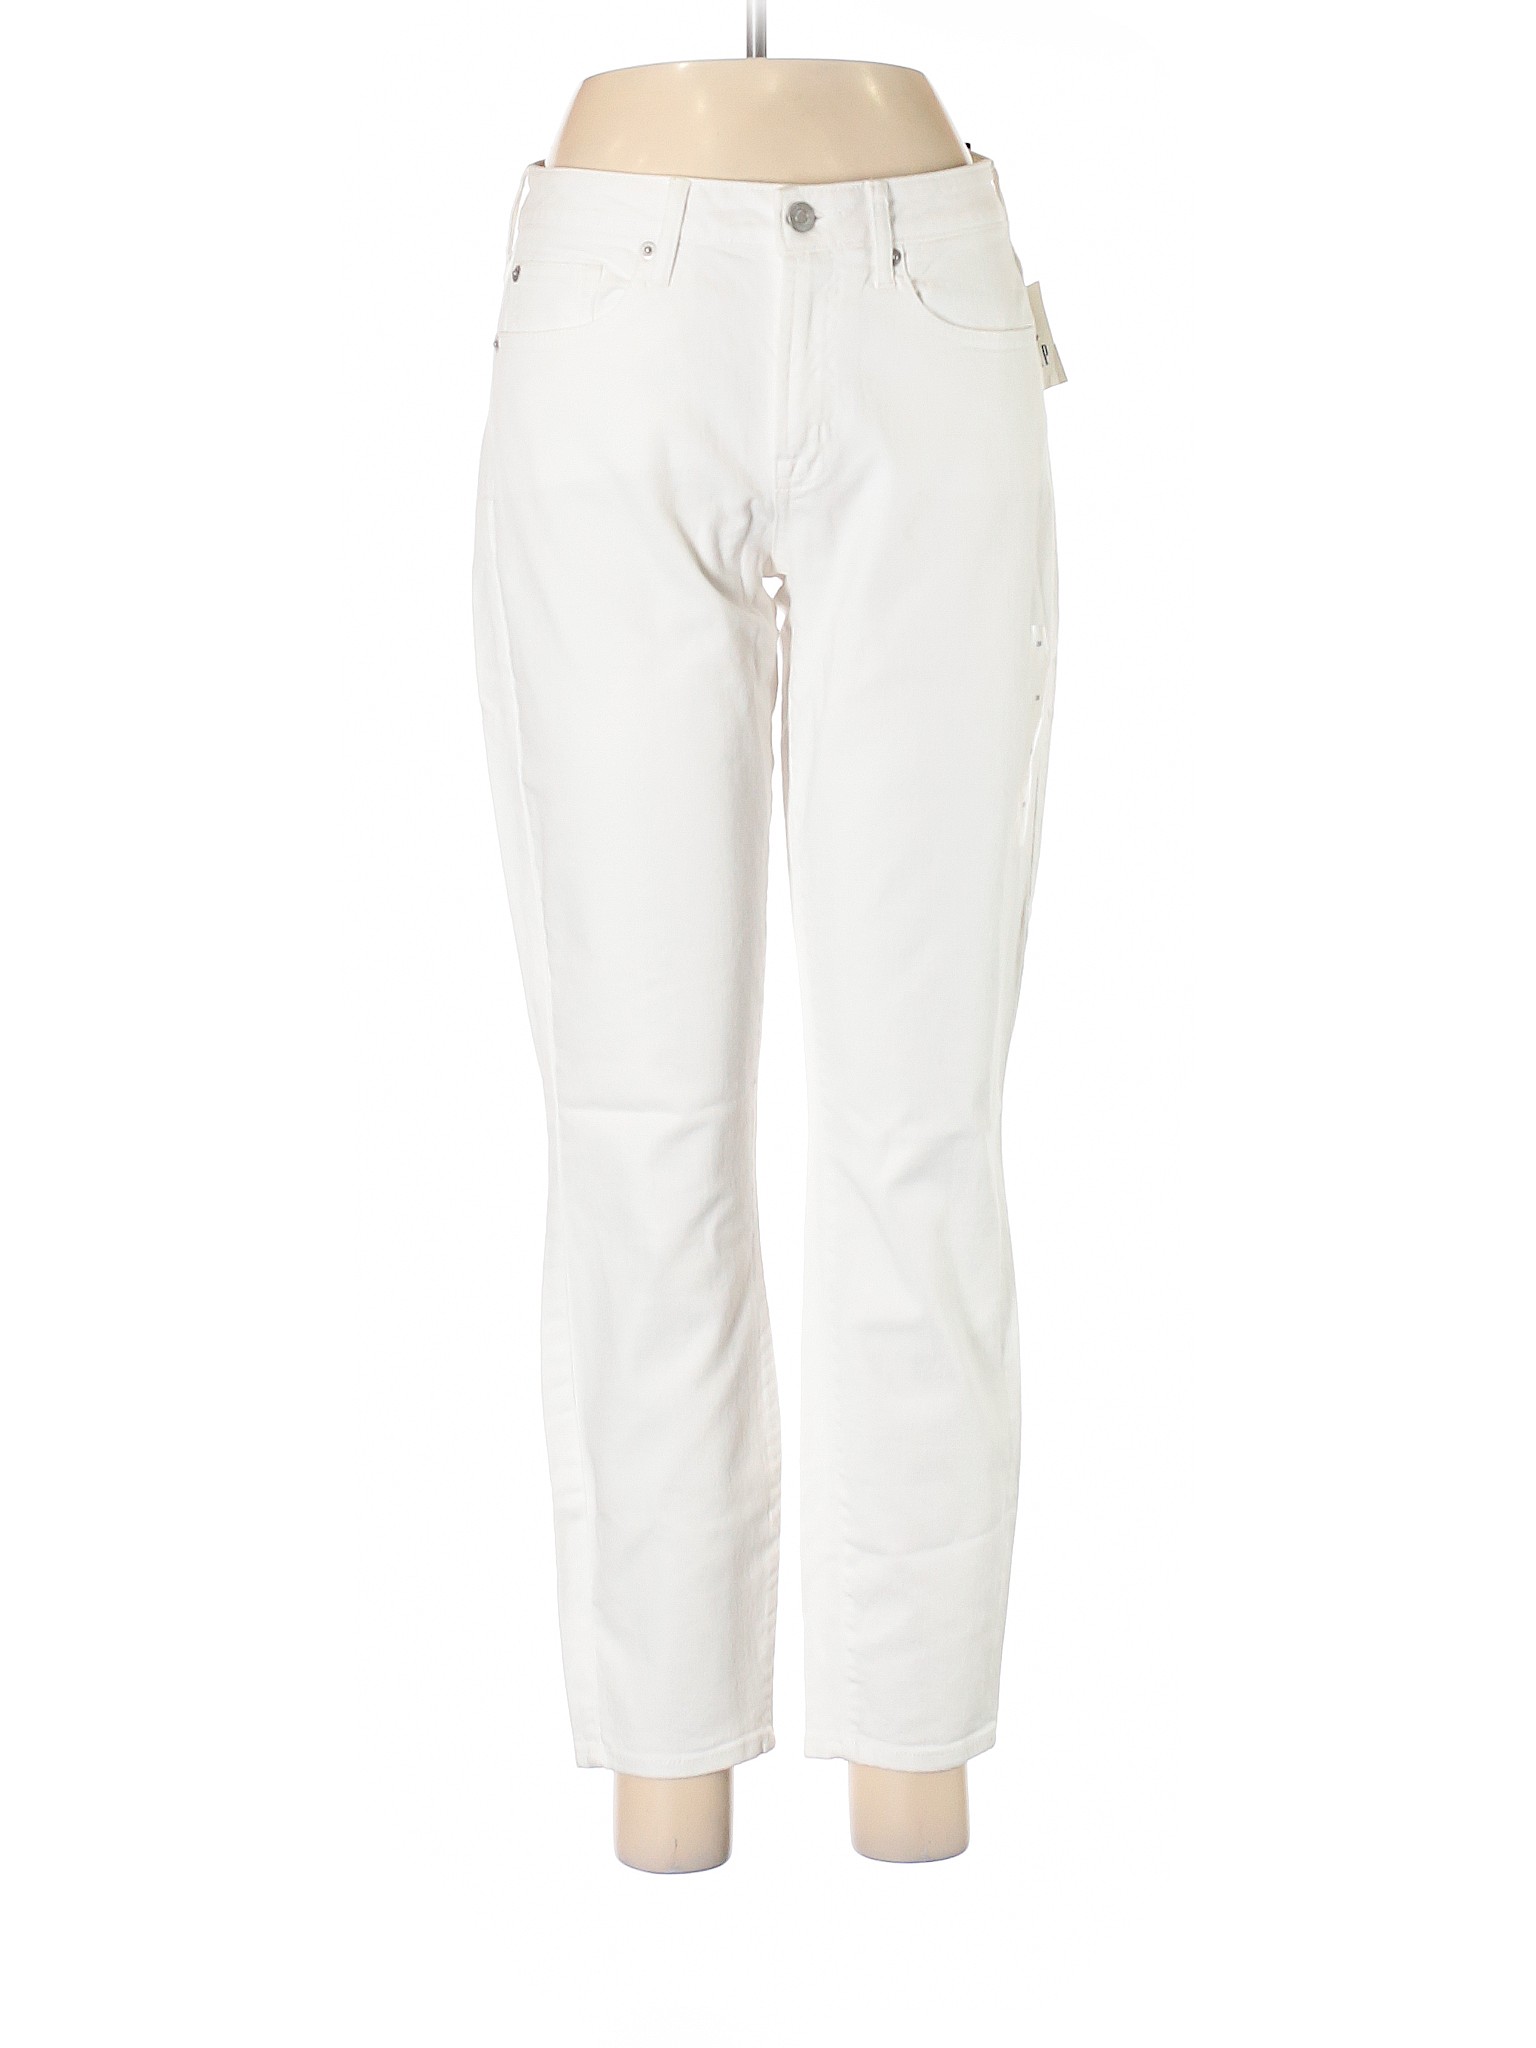 NWT Gap Women White Jeans 28W | eBay